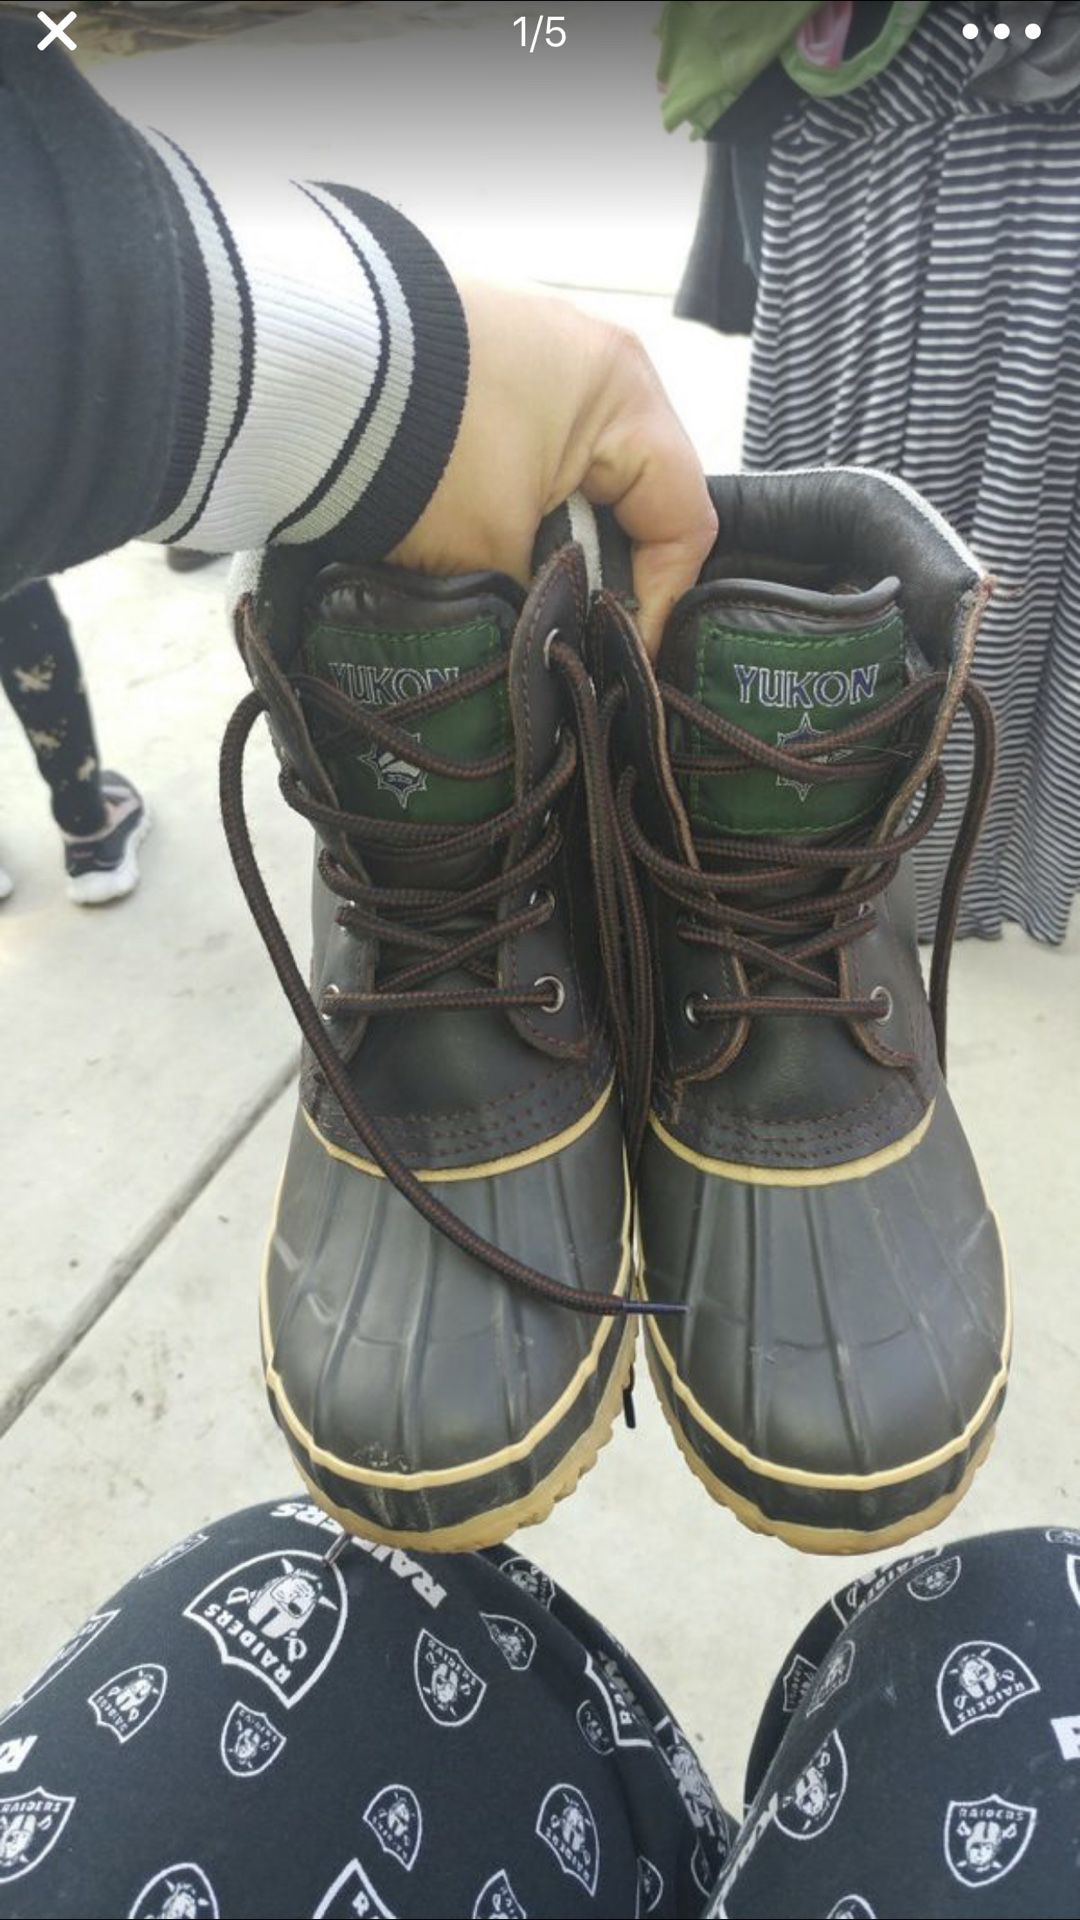 Yukon snow boots kids size 2